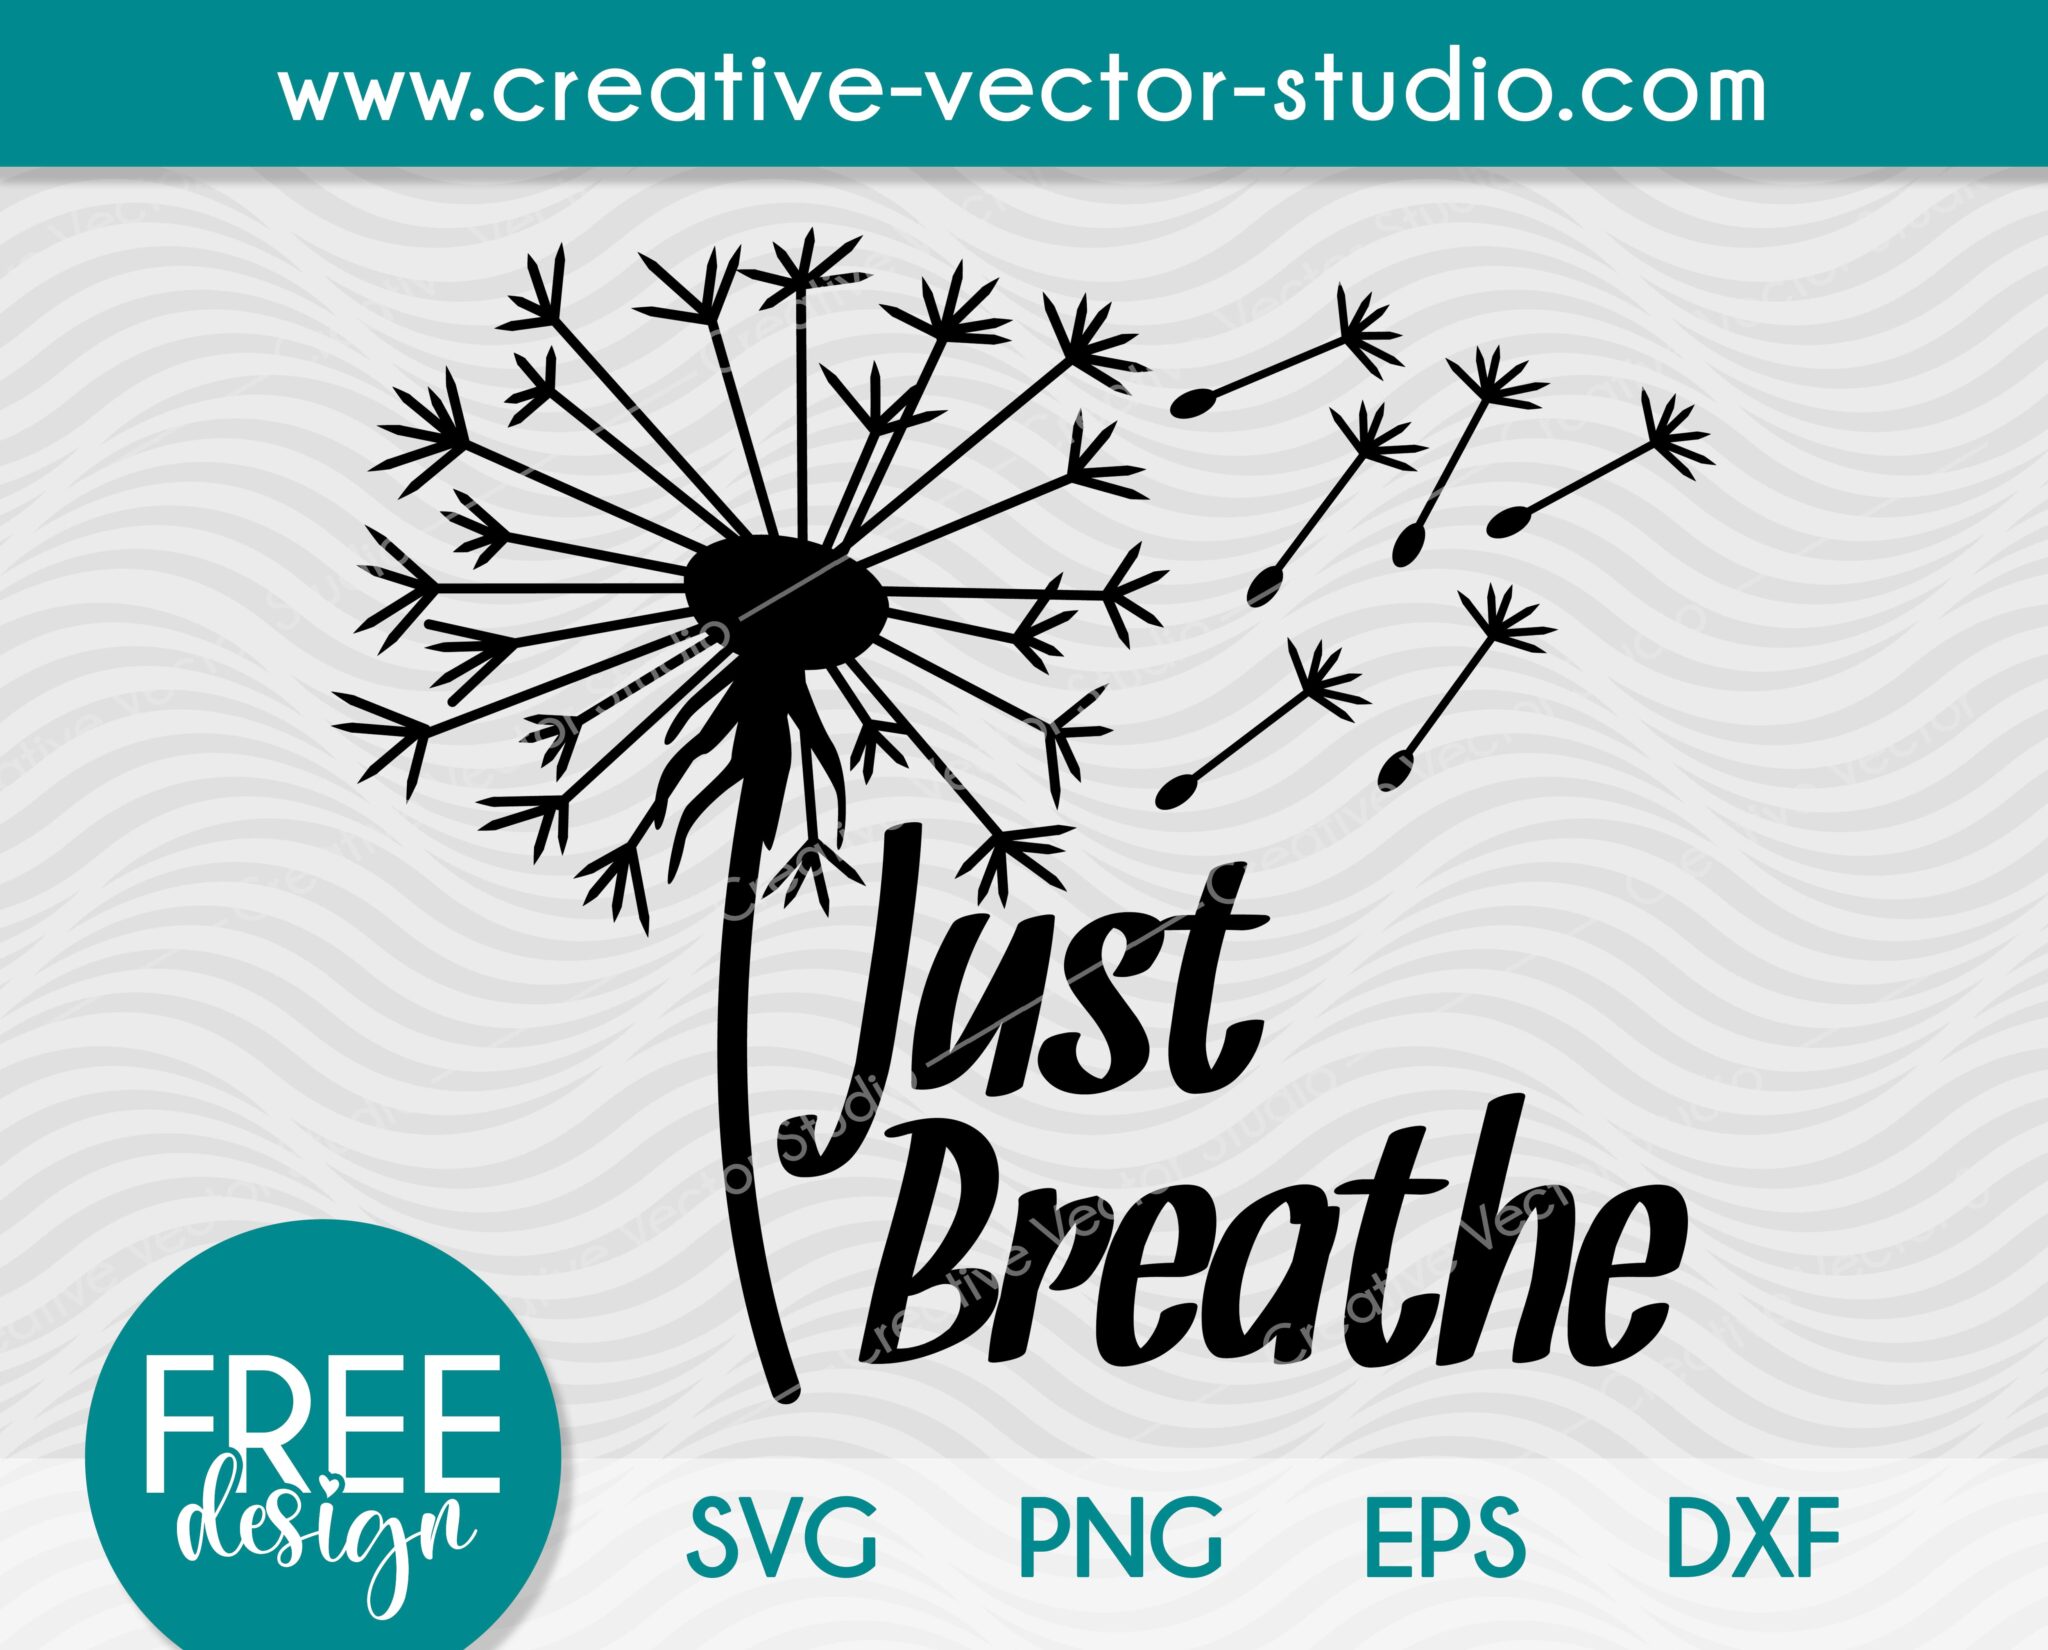 Free Just Breathe SVG, Dandelion SVG - Creative Vector Studio